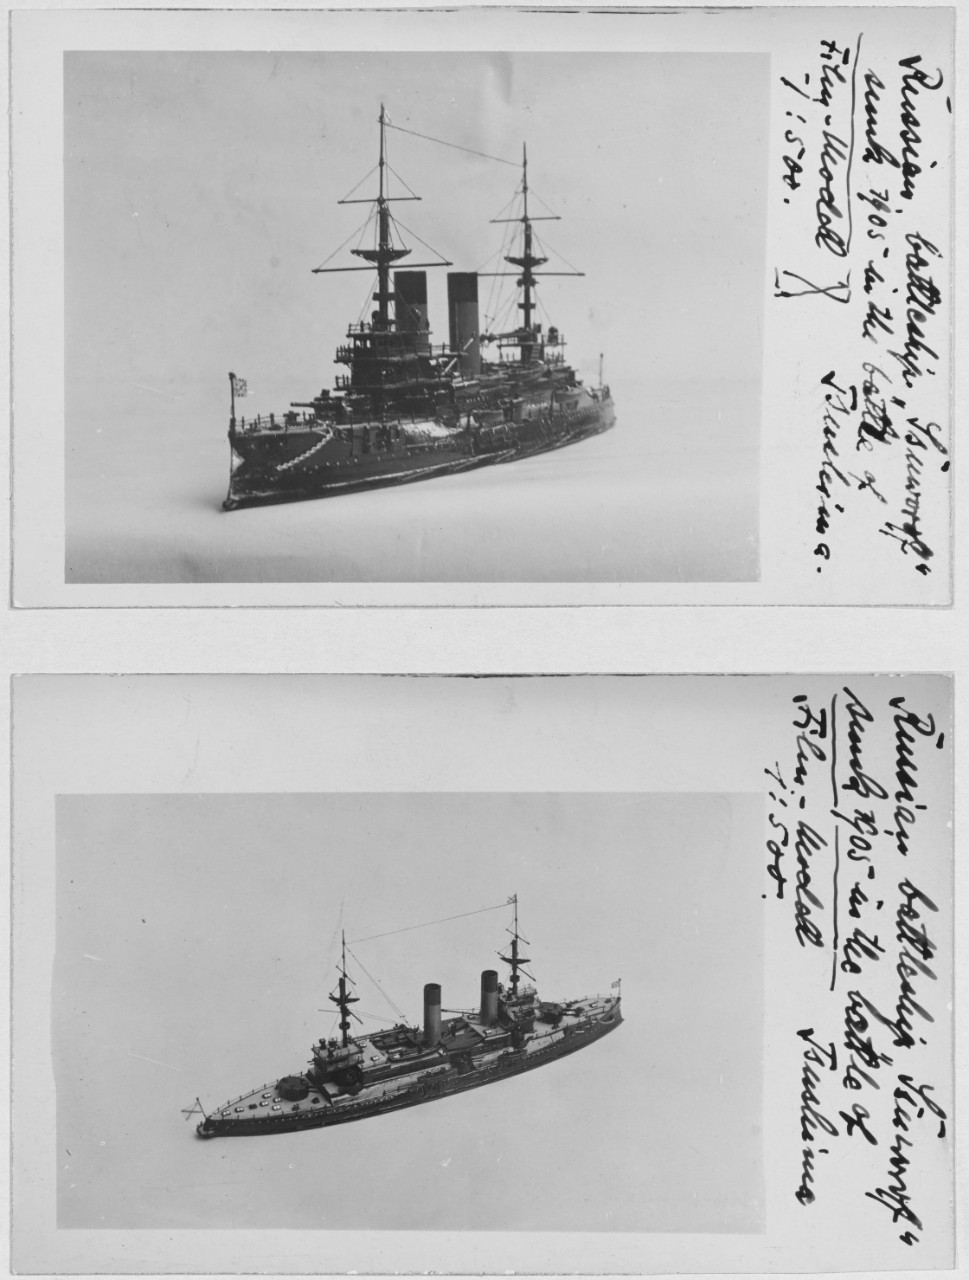 KNIAZ SUVAROFF Russian Battleship, 1903